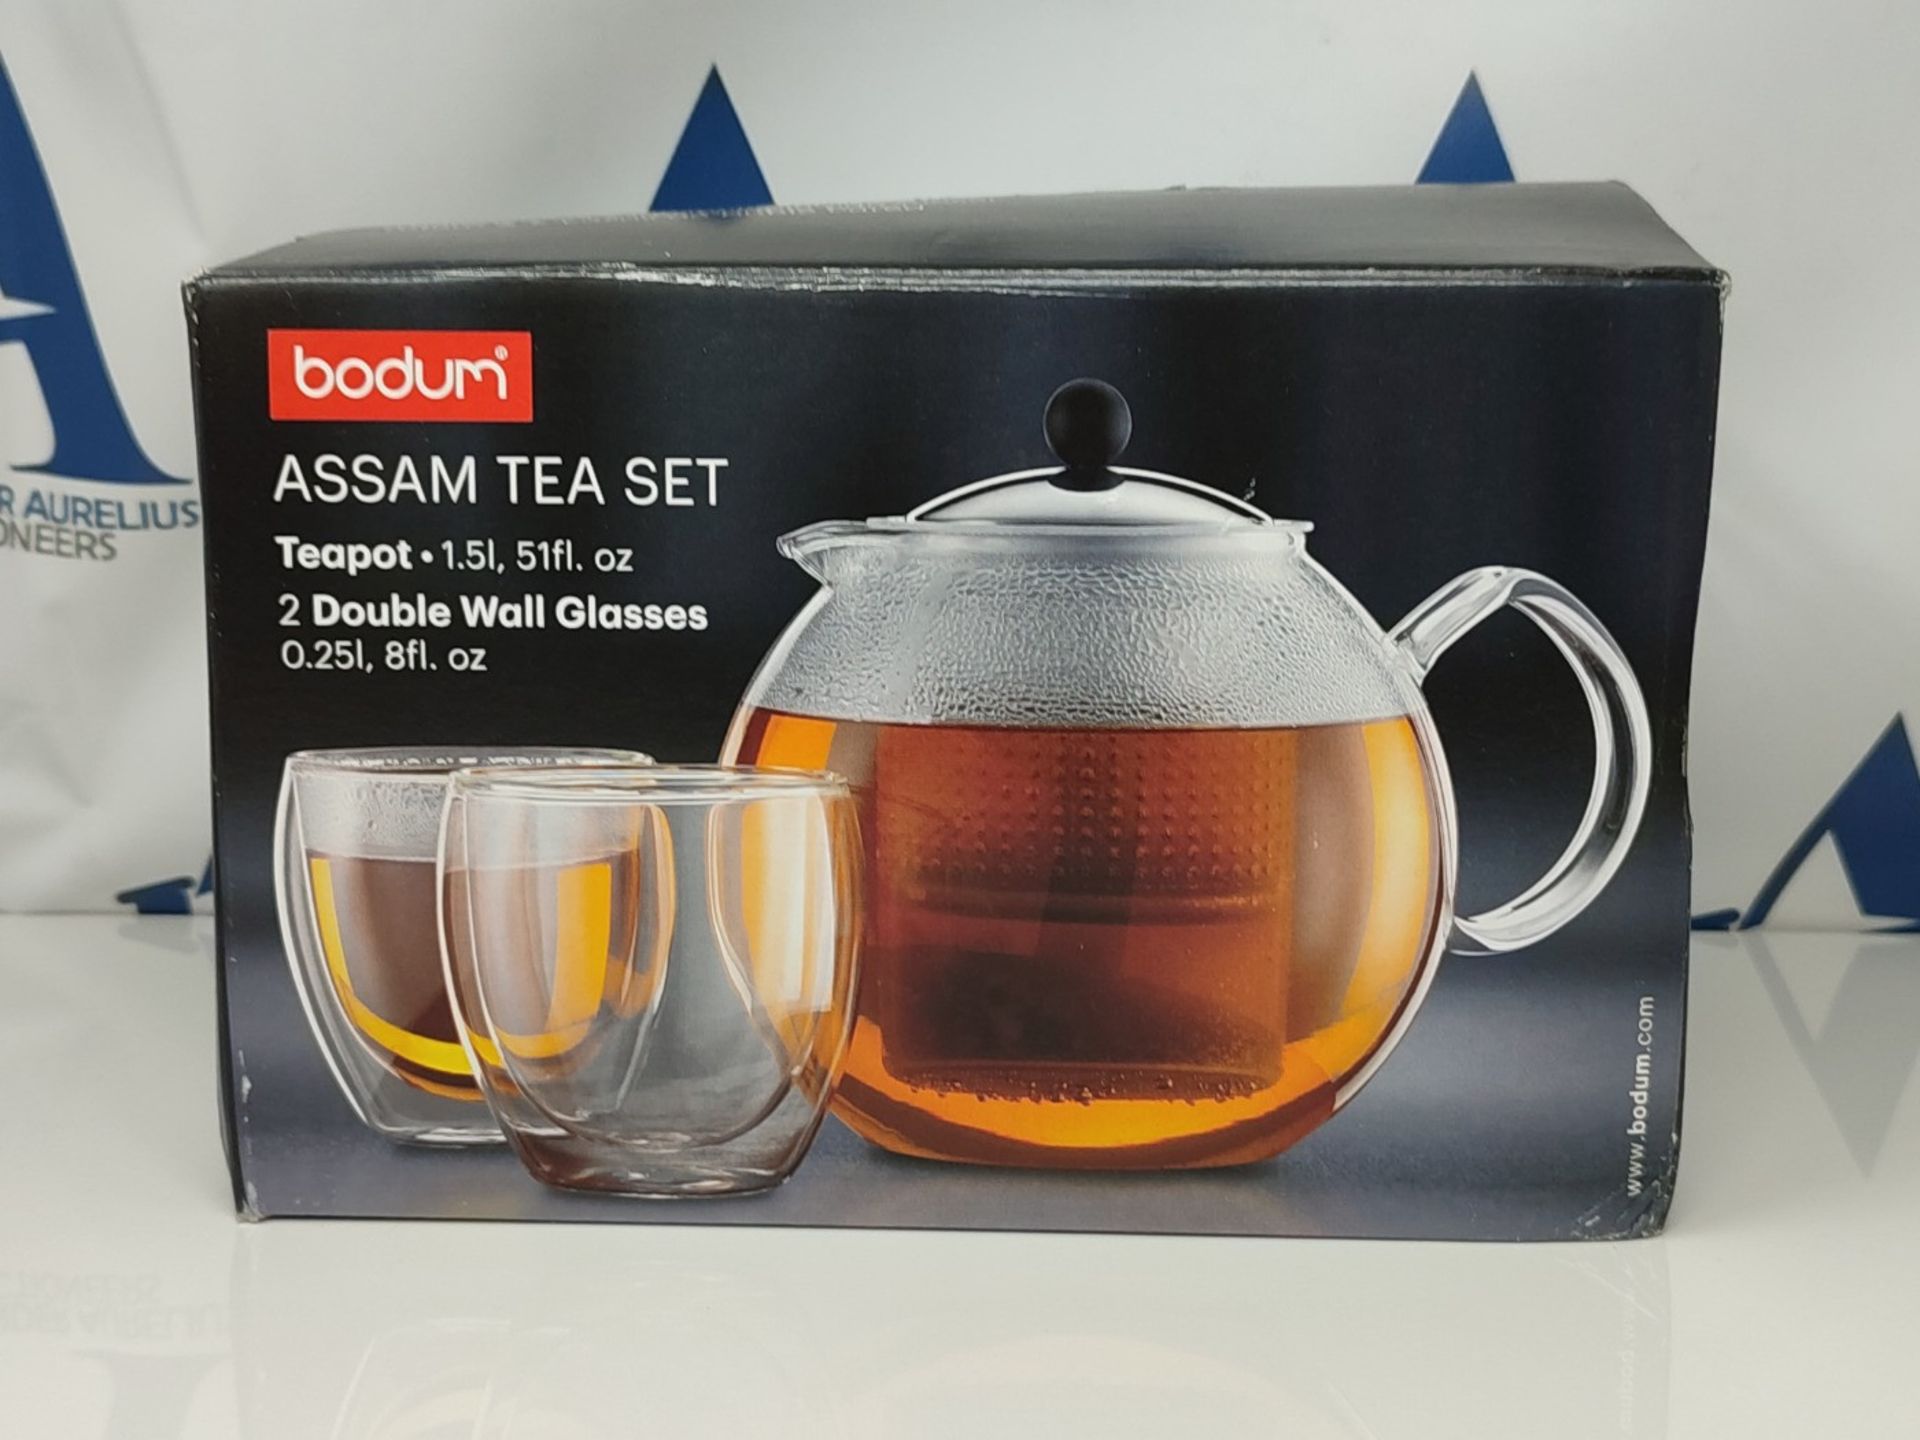 Bodum ASSAM SET Tea Press (1.5 L/51 oz) and Glases (Double-walled, 0.25 L/8 oz) - Shin - Image 2 of 3